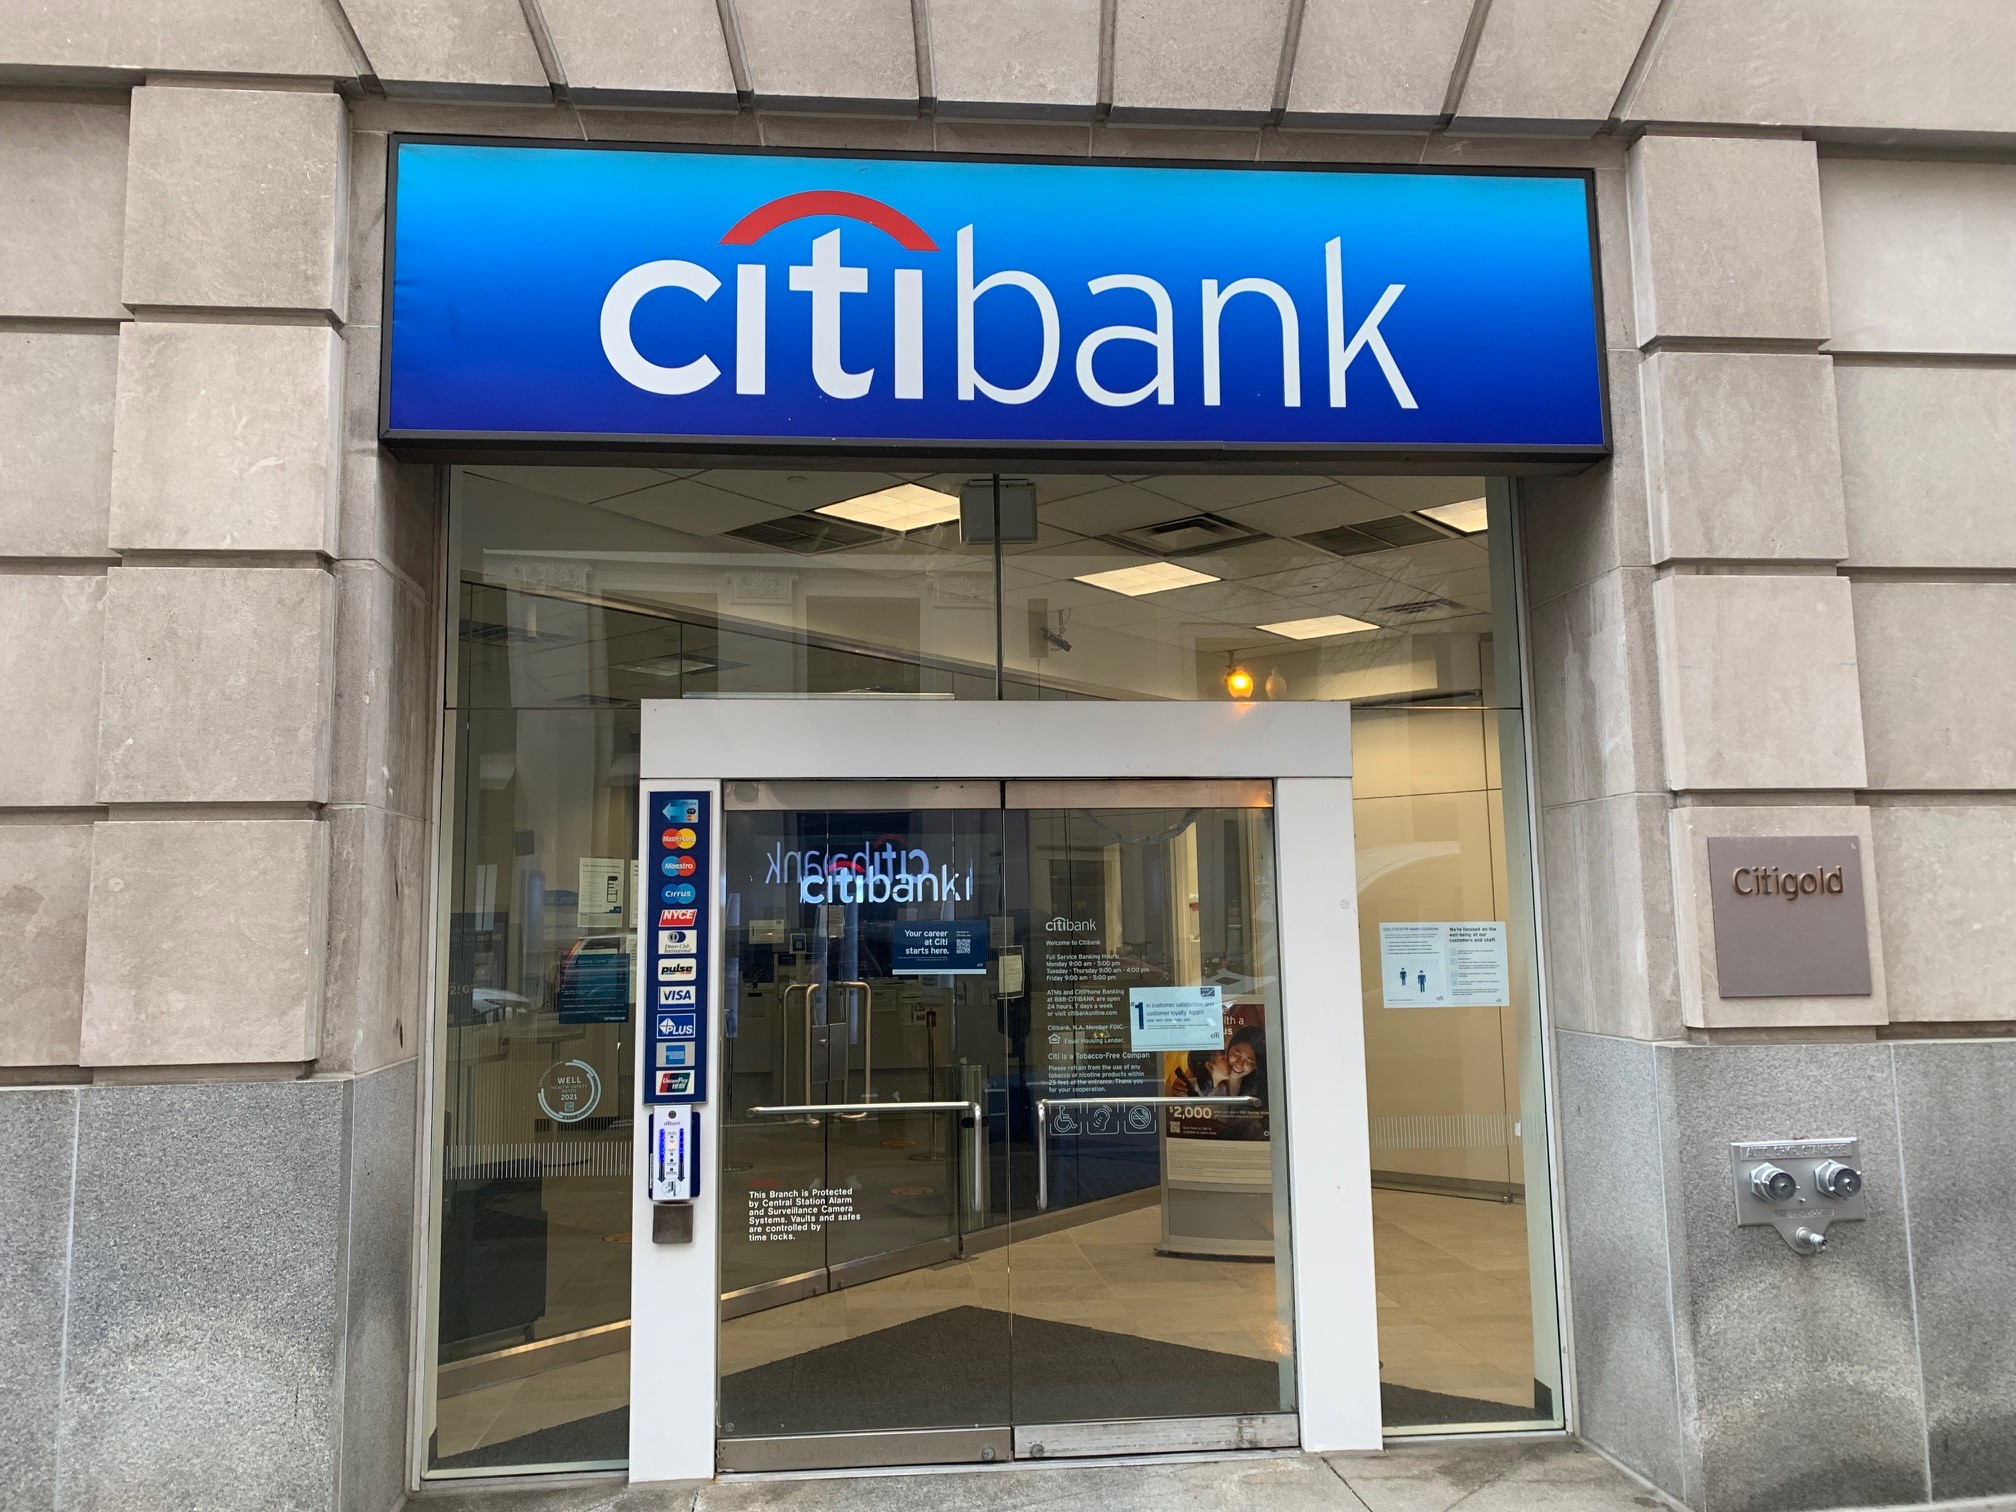 Citibank fraud verification process